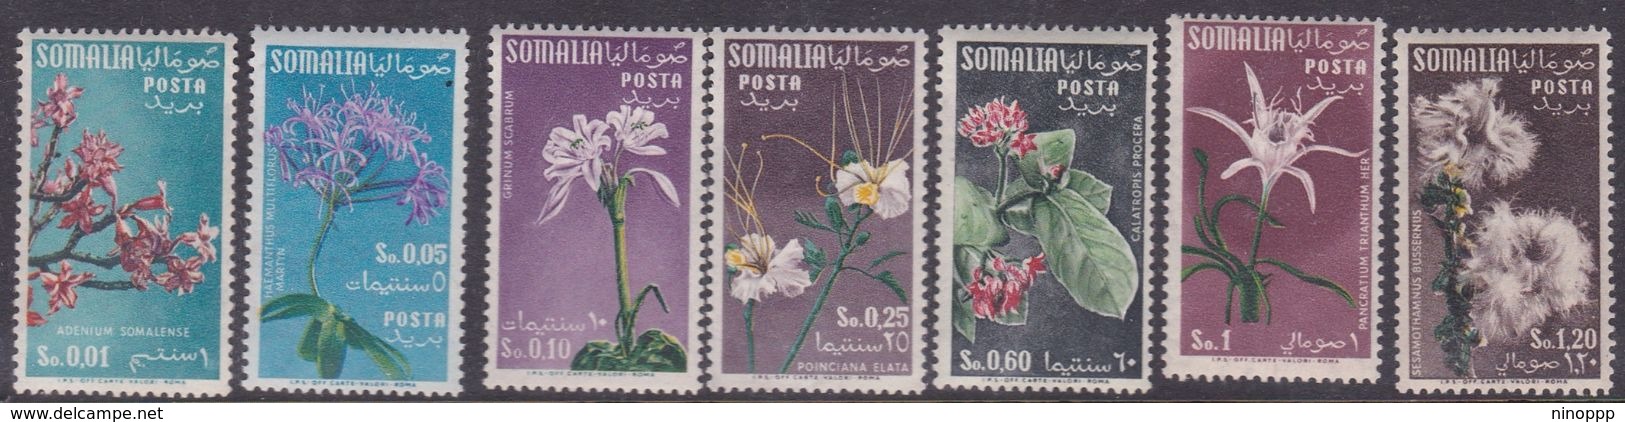 Somalia Scott 199-204 1955 Flower, Mint Never Hinged - Somalia (AFIS)